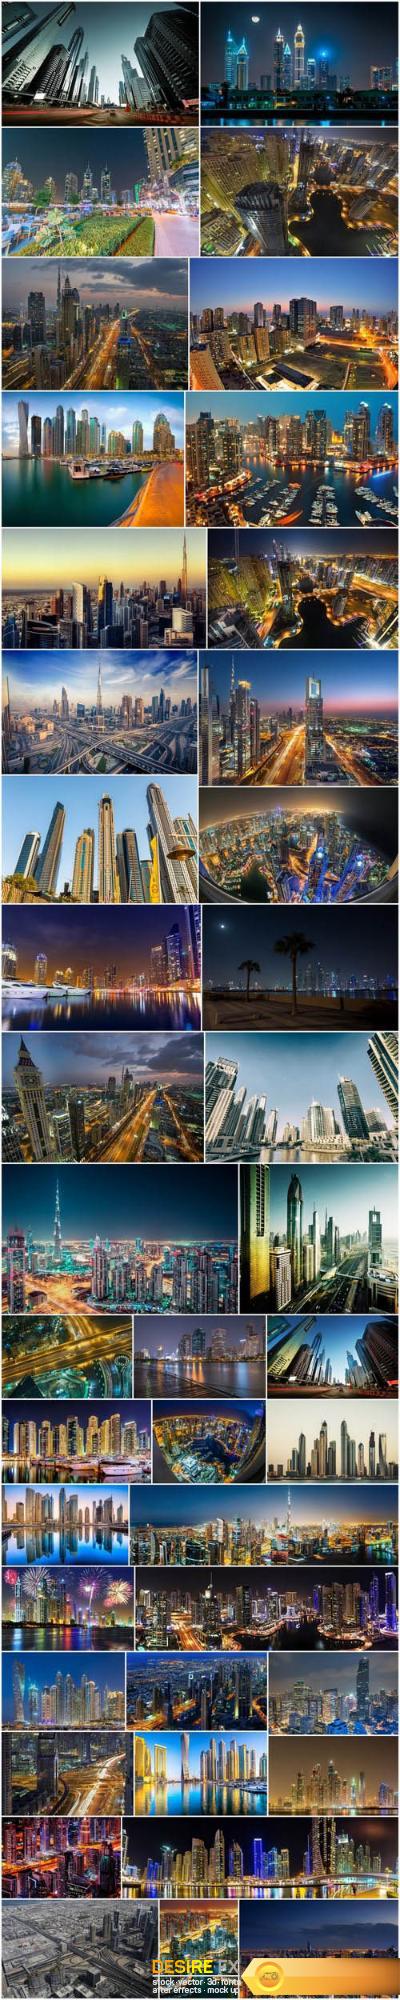 Dubai Travel – Skyscrapers, Set of 42xUHQ JPEG Professional Stock Images